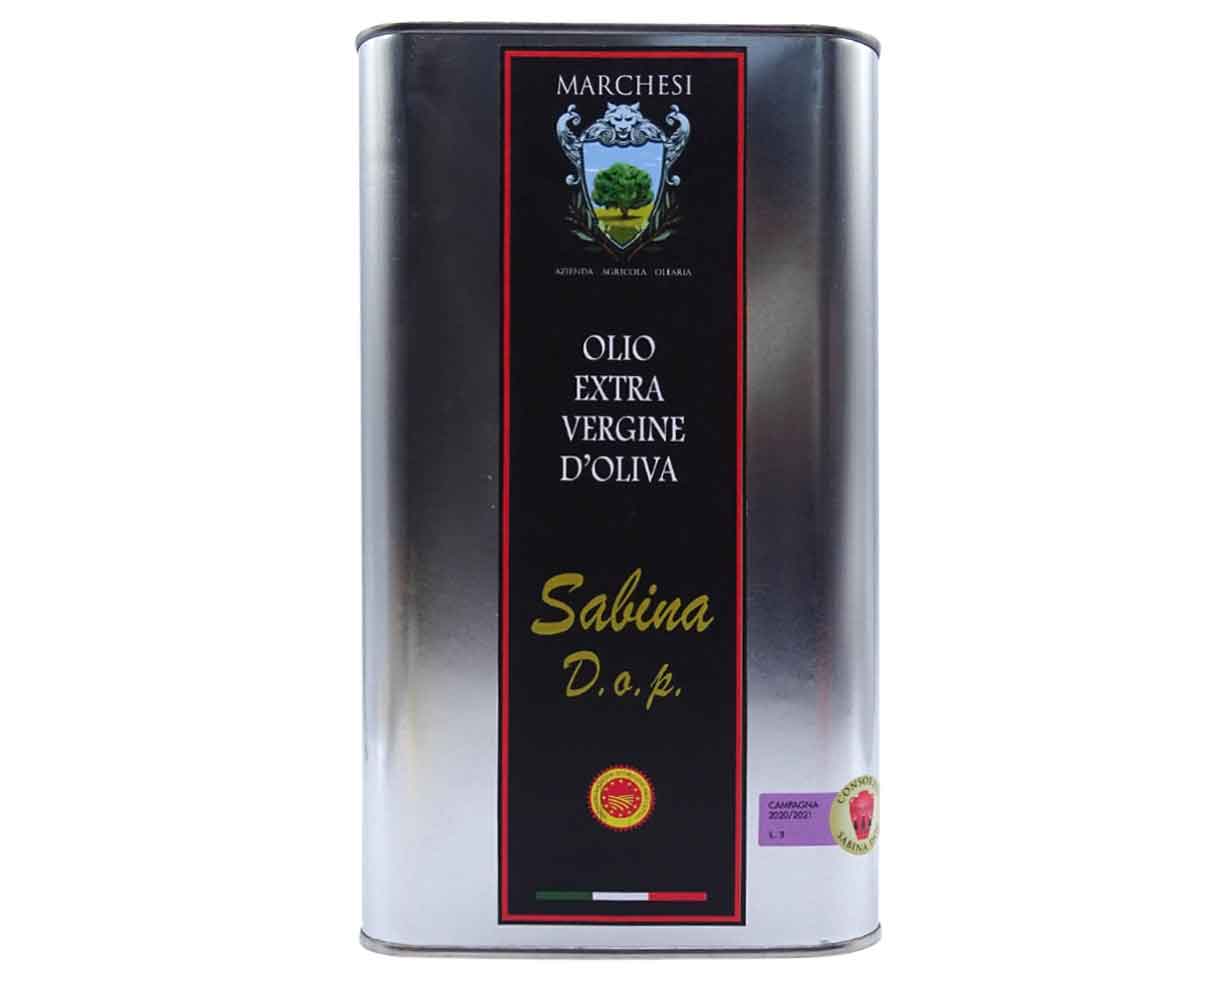 Olio extravergine d'oliva della Sabina DOP Marchesi 3lt